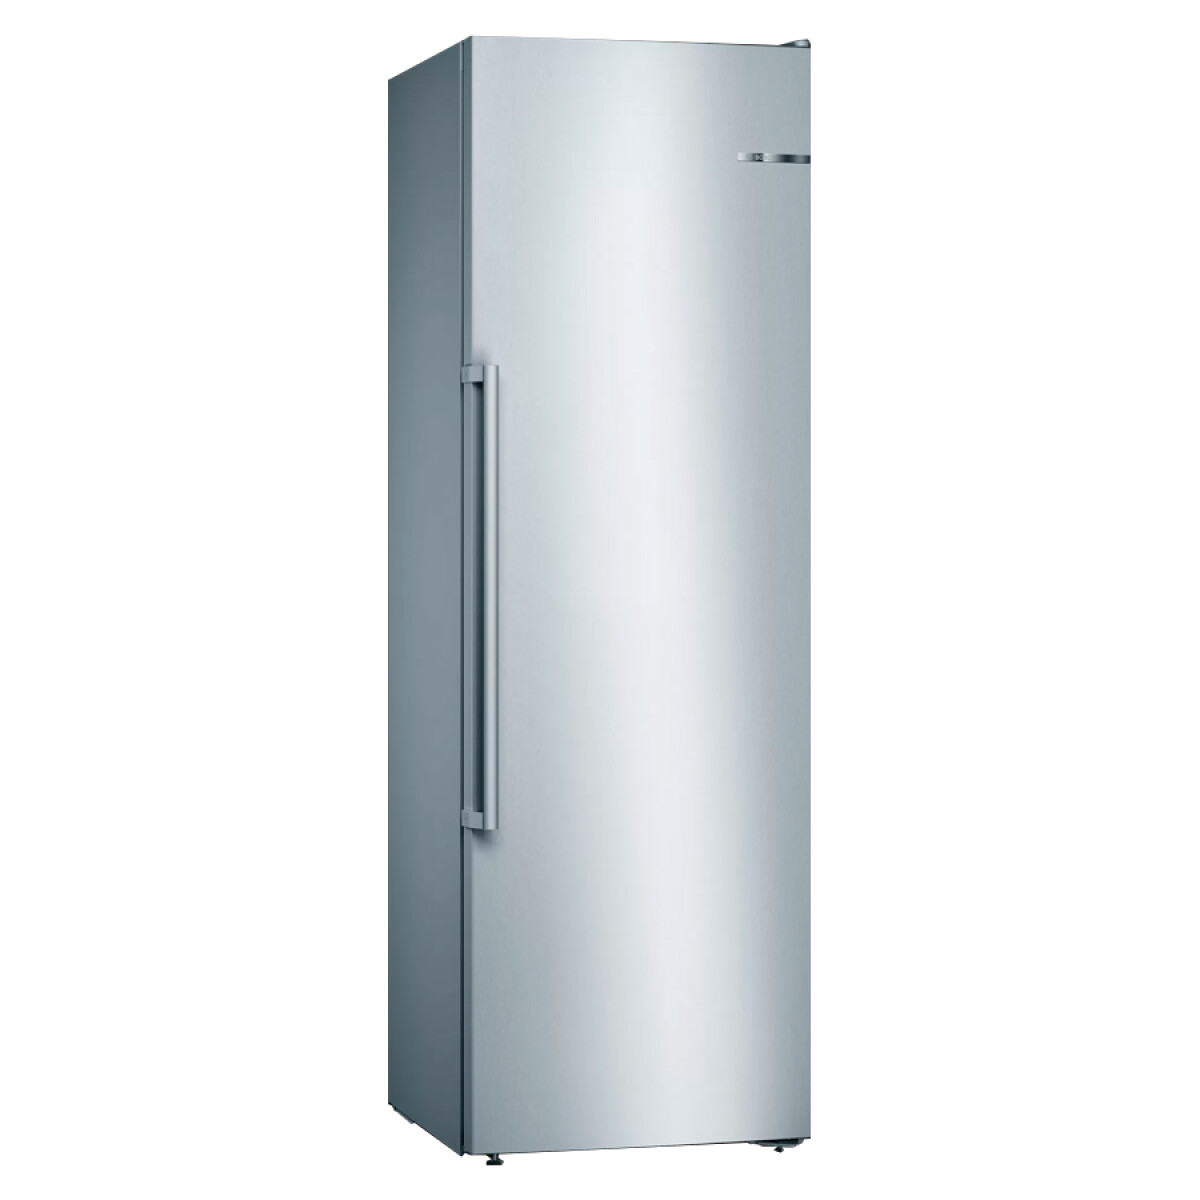 Freezer Bosch GSN36AIEP 1 puerta inox. 242 Lts. 